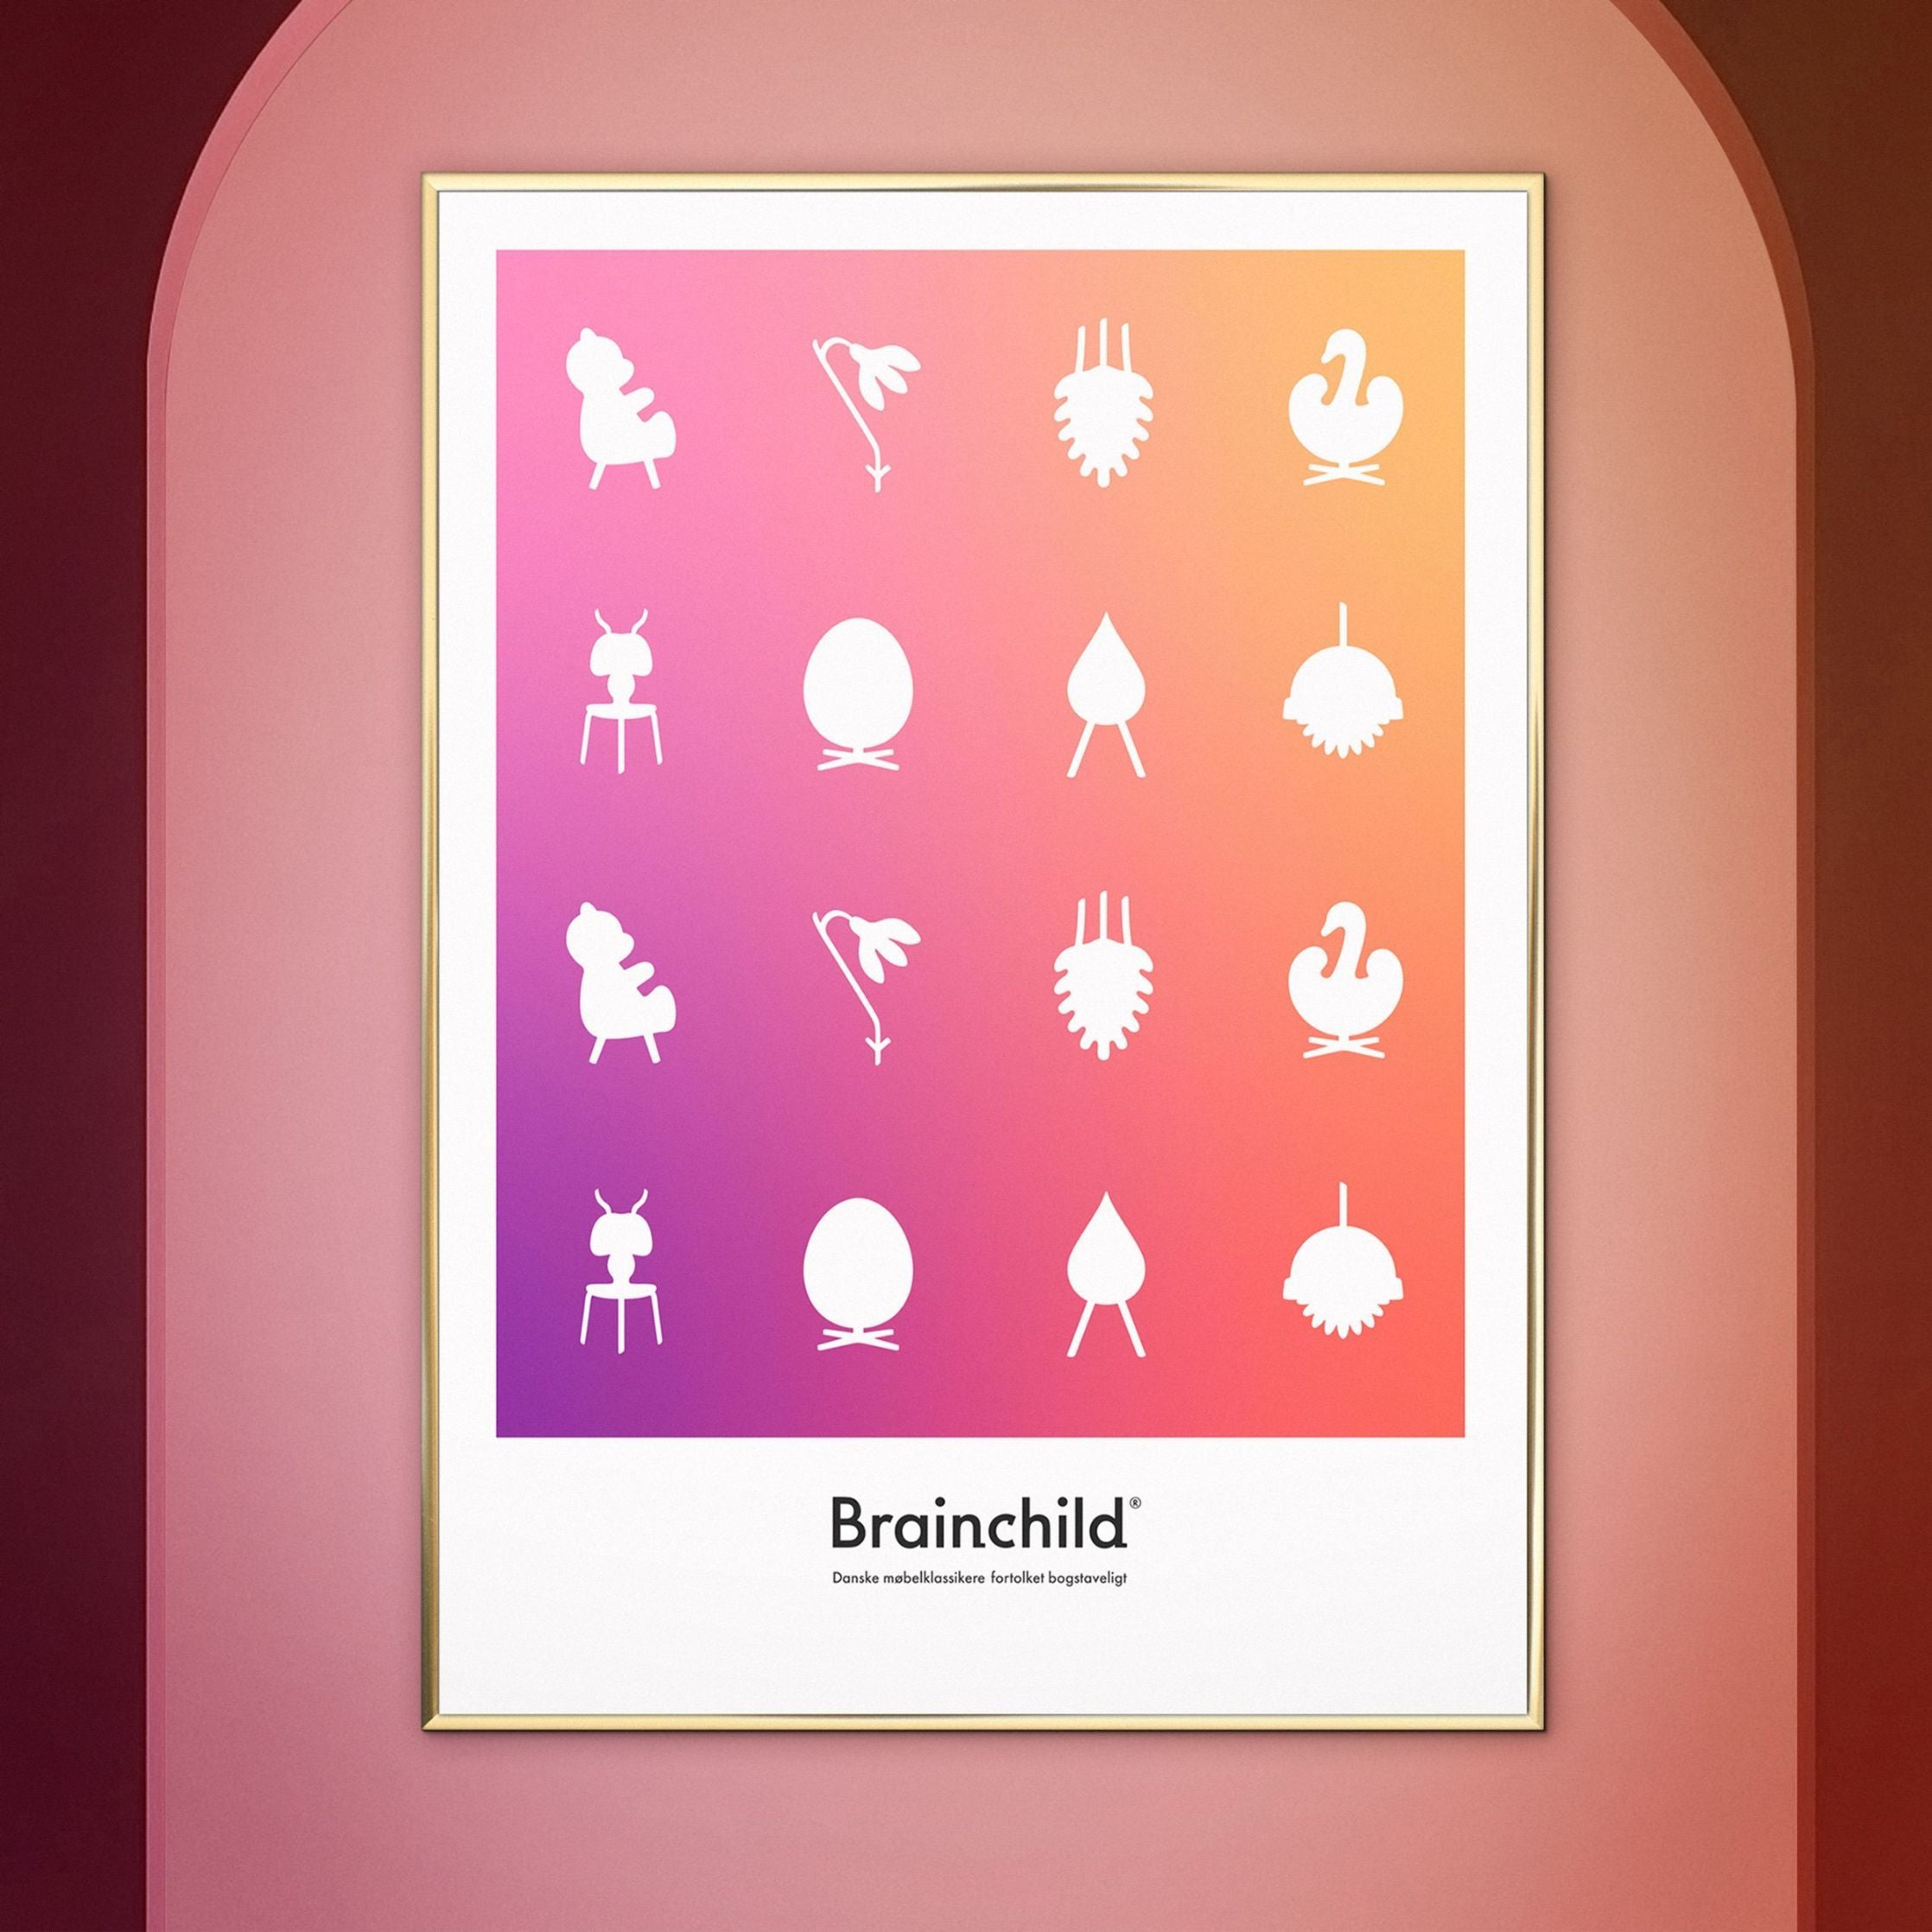 Brainchild Ontwerppictogram Poster, frame gemaakt van licht hout A5, kleur